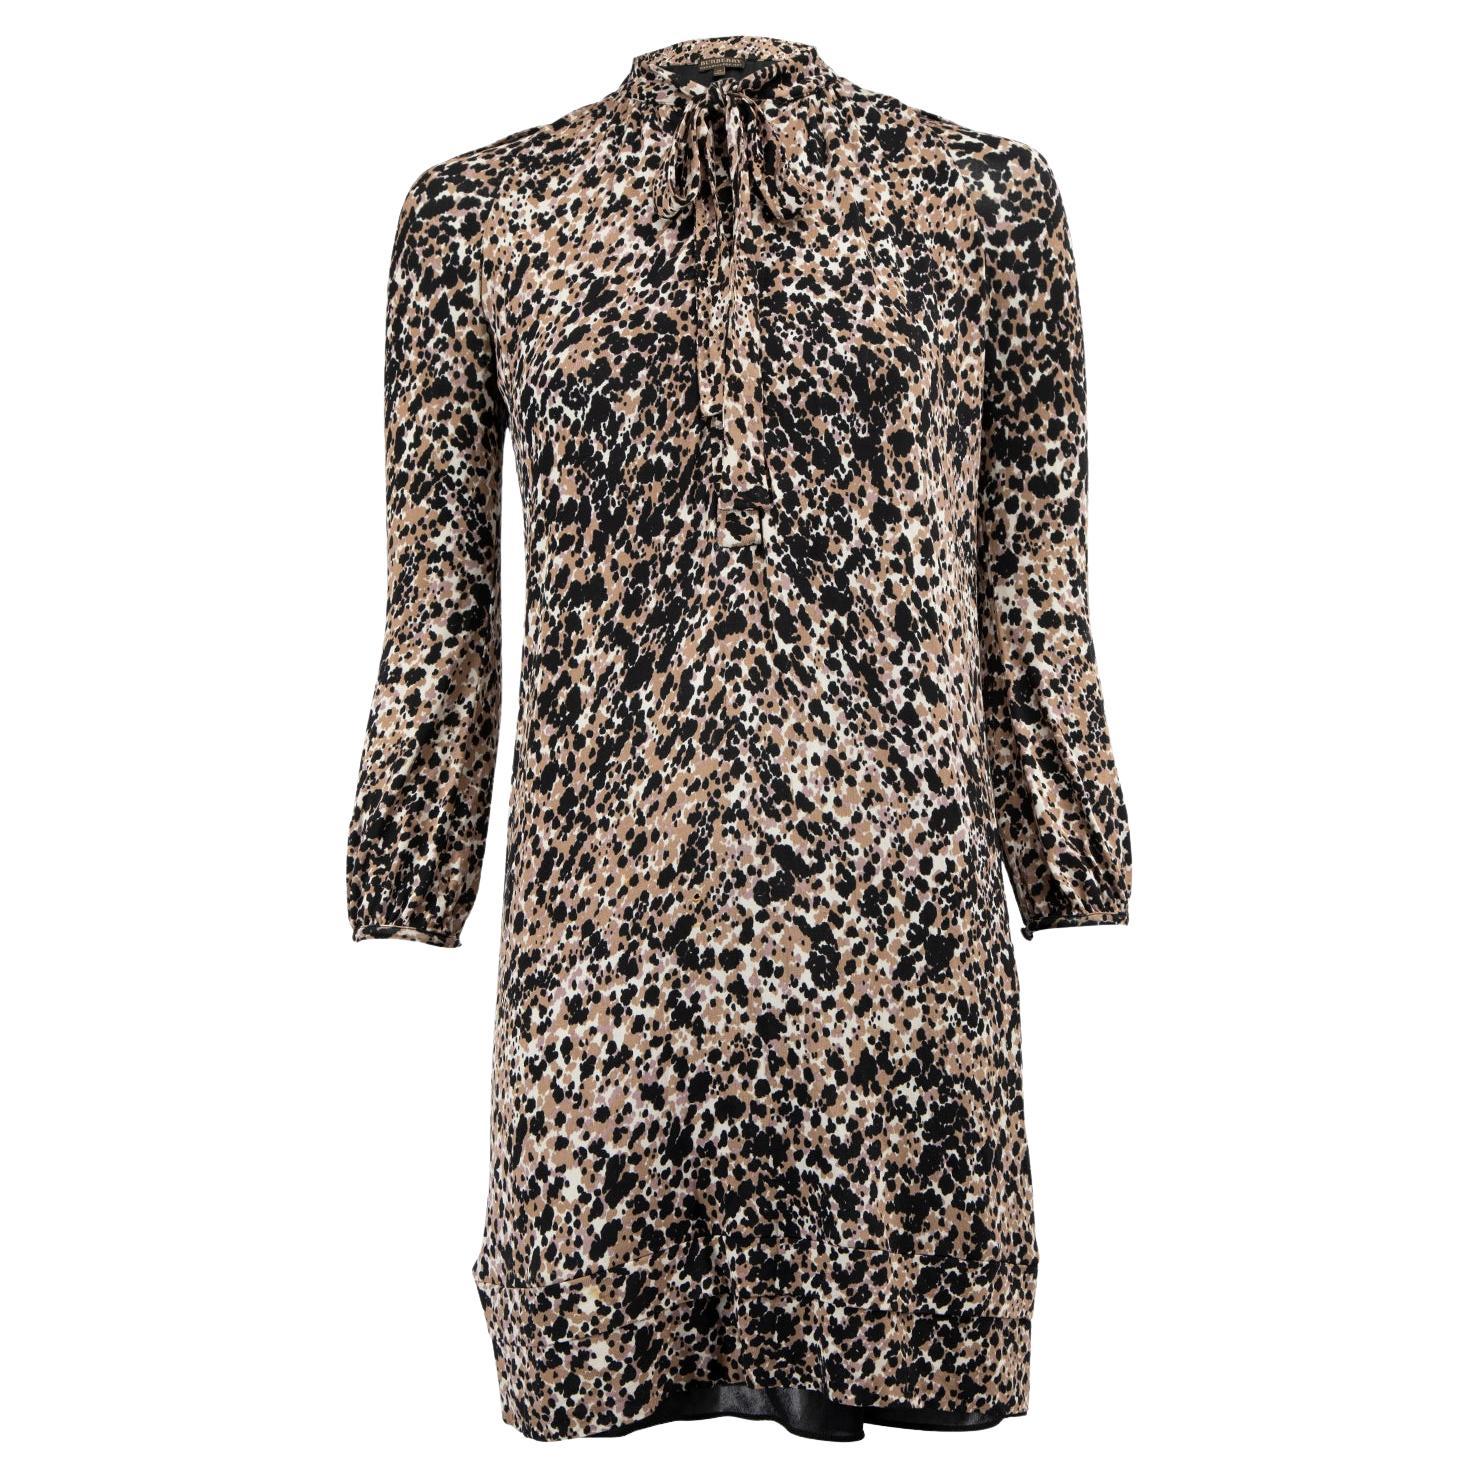 Pre-Loved Burberry Women's Leopard Print Patterned Dress For Sale